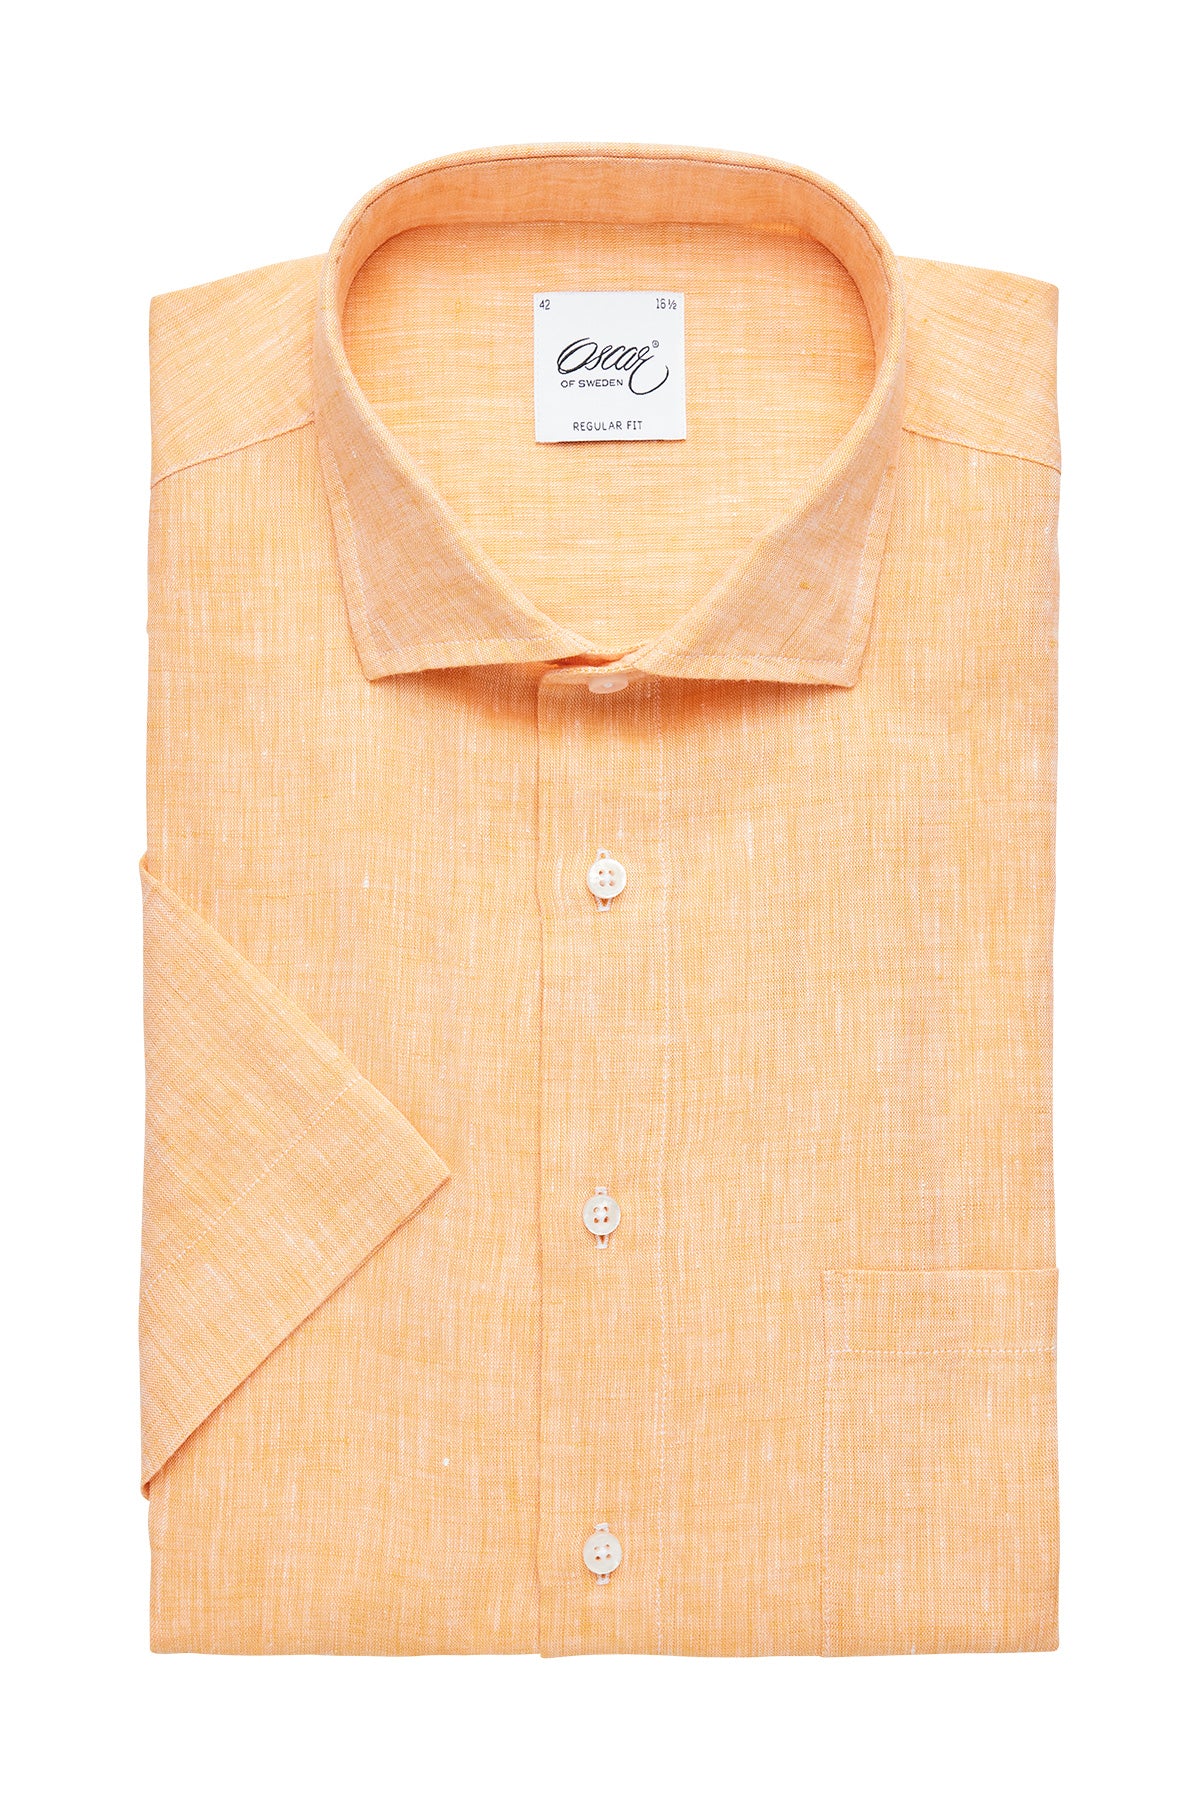 Orange short sleeve regular fit linen shirt